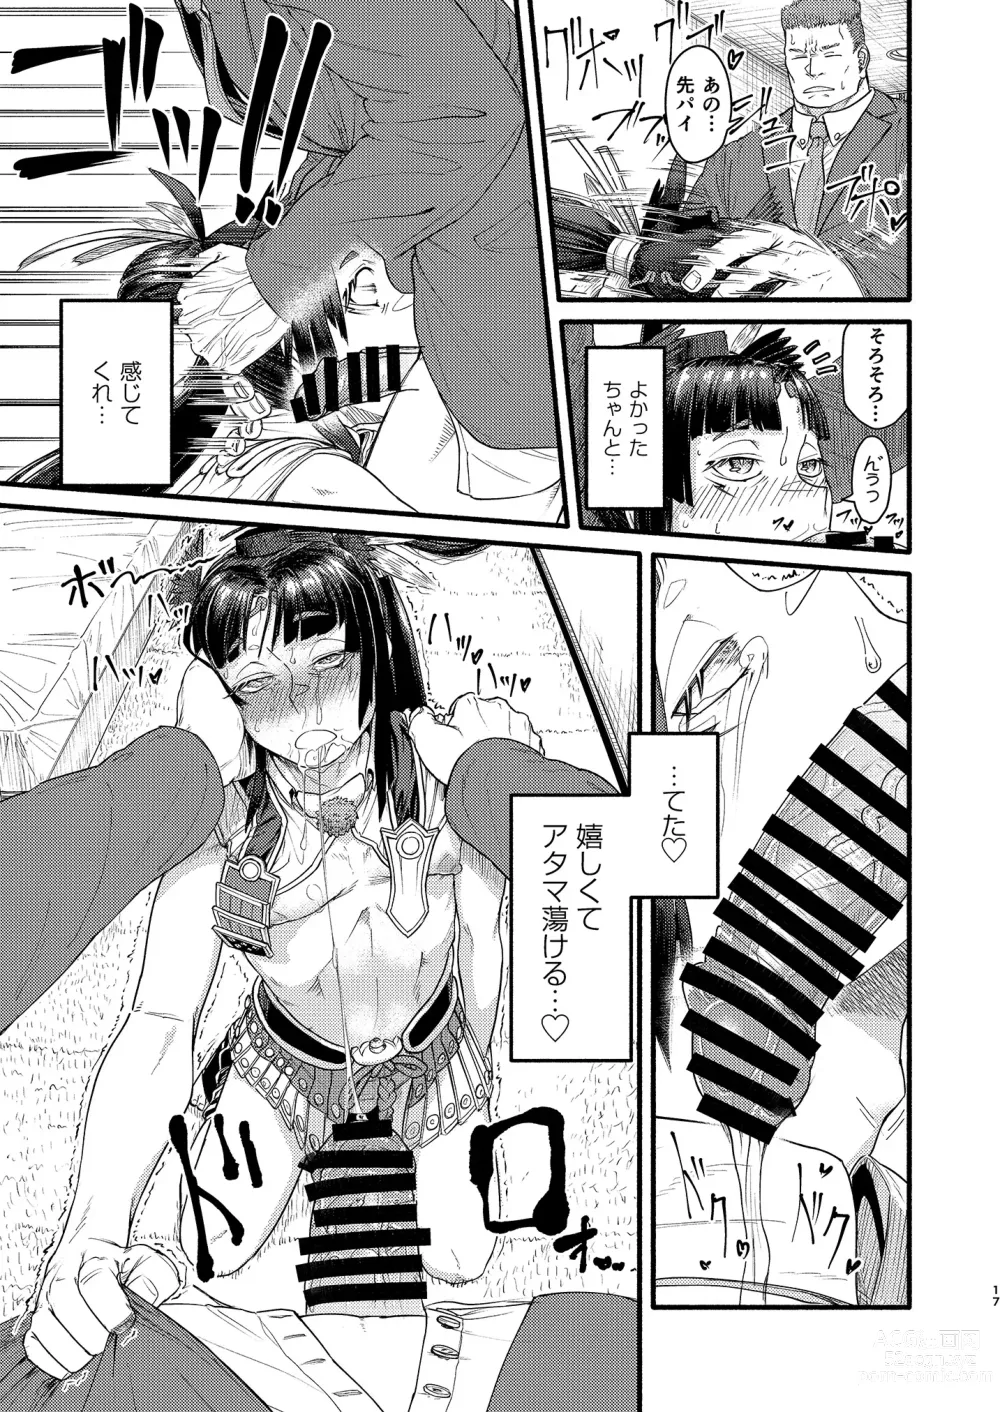 Page 16 of doujinshi MHD-02